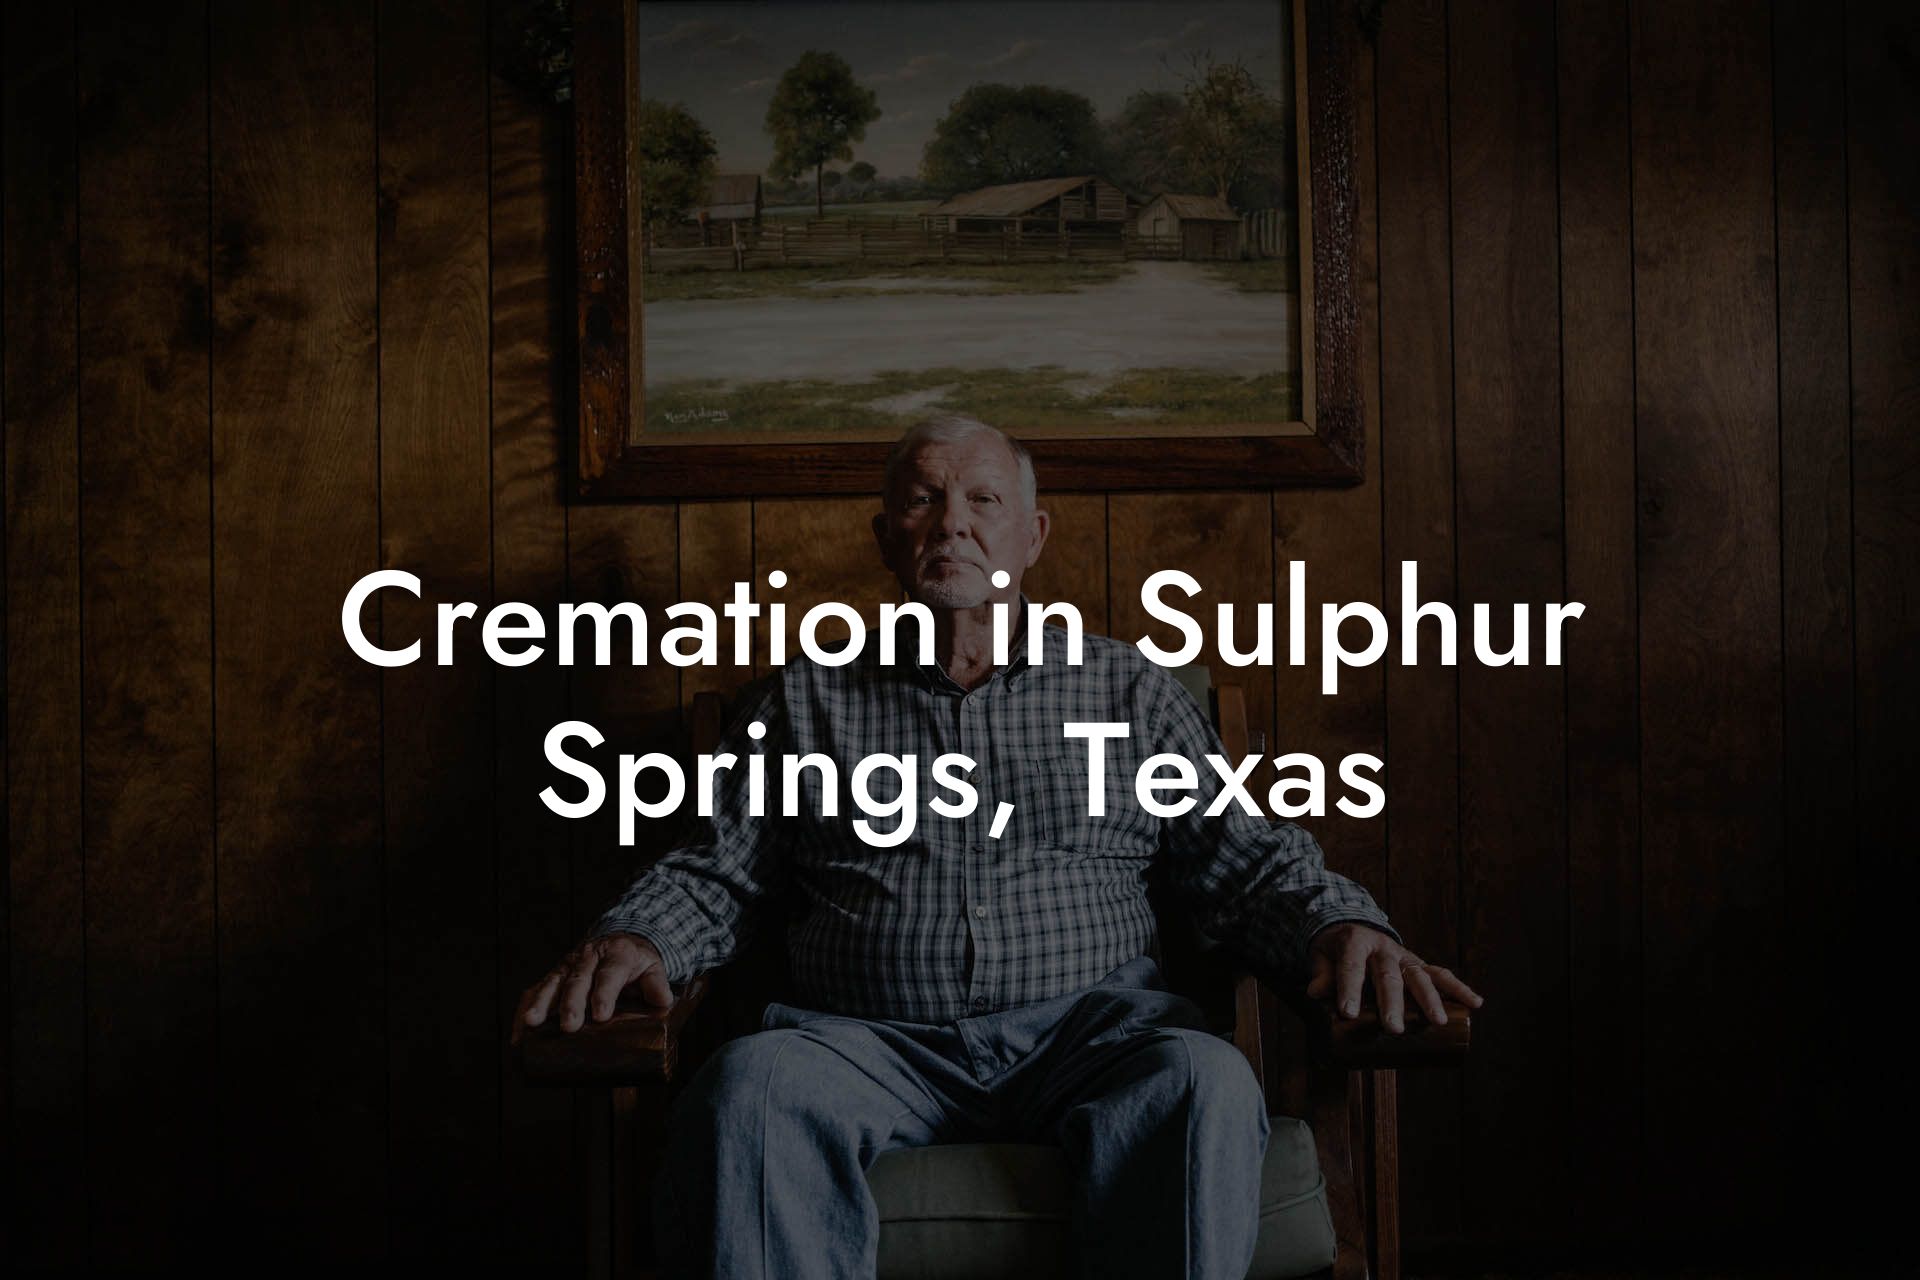 Cremation in Sulphur Springs, Texas